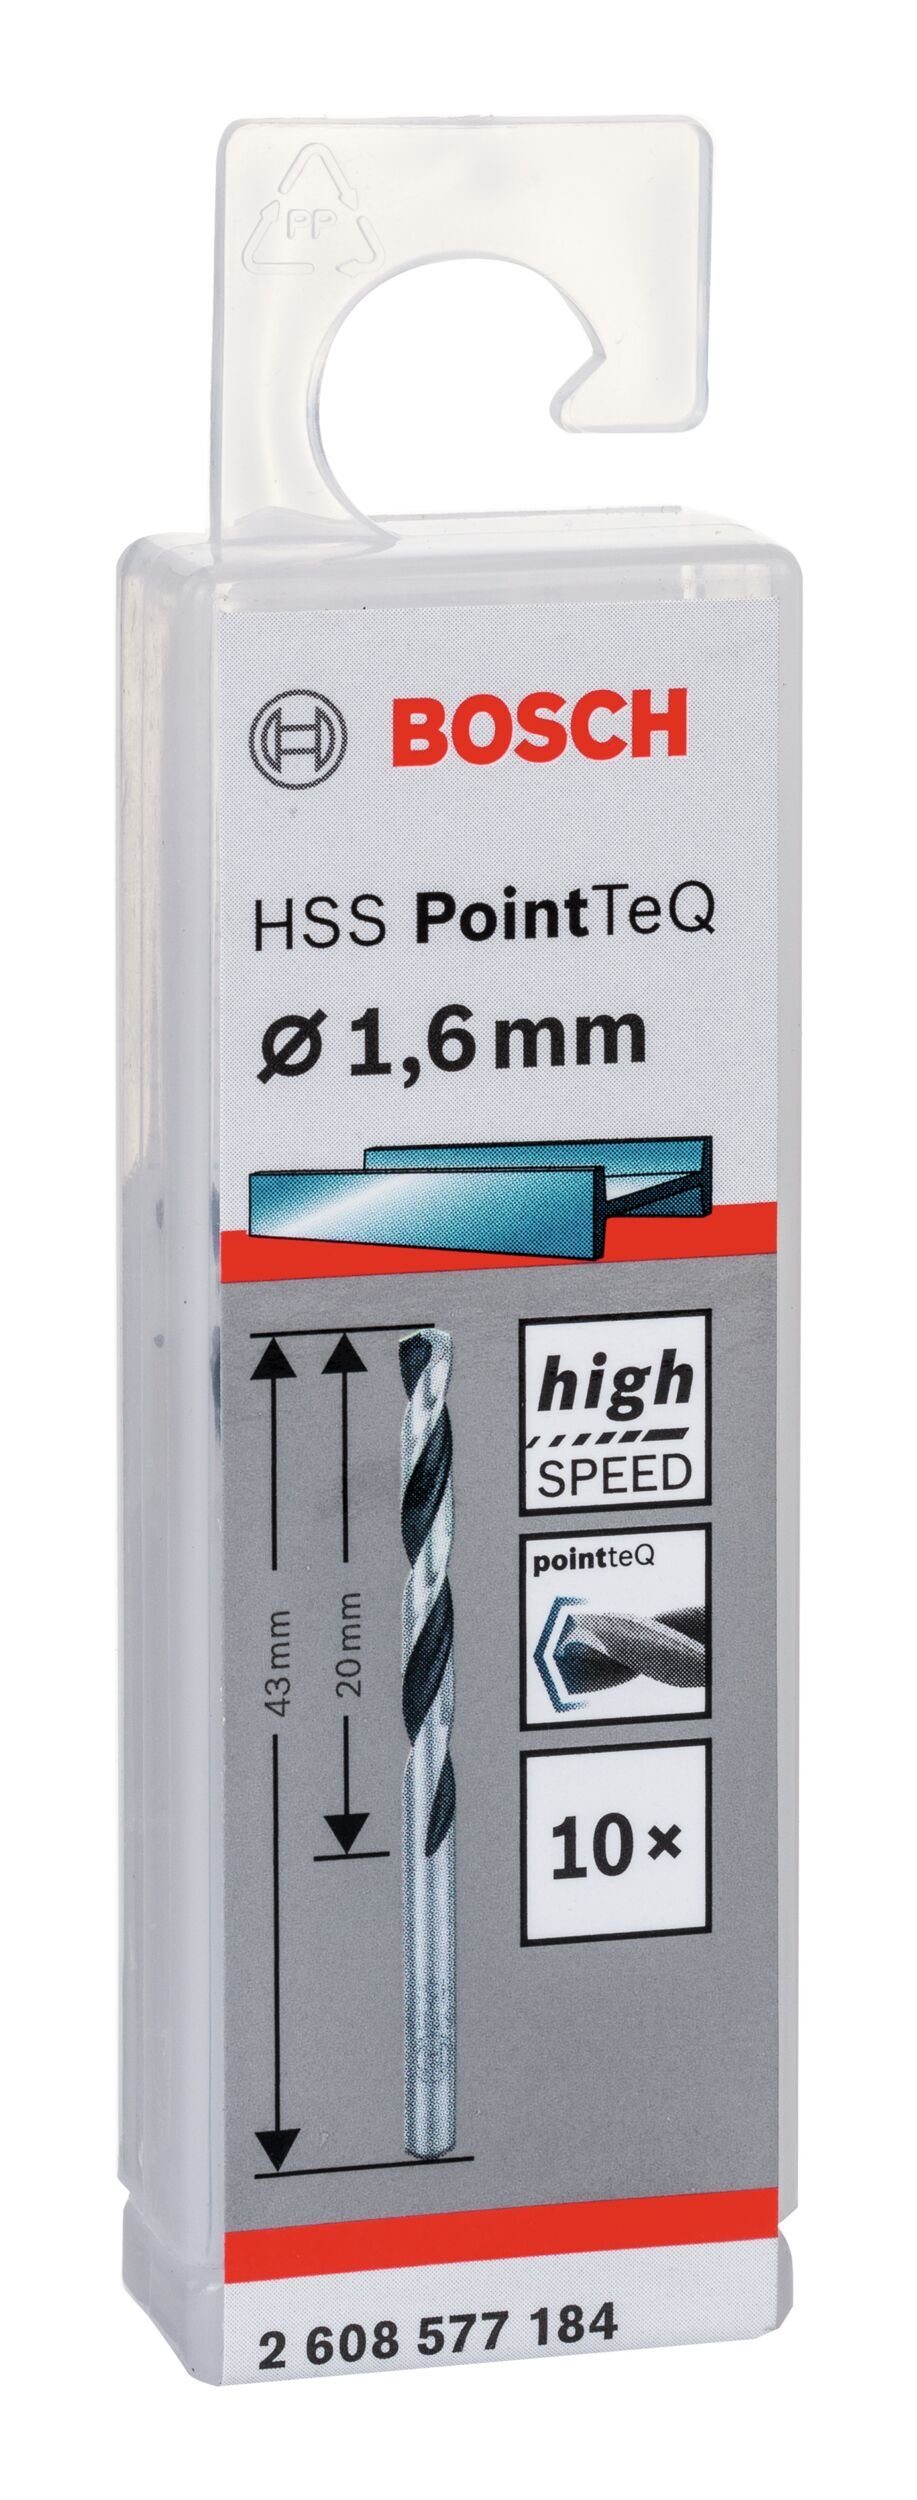 HSS PointTeQ mm Metallspiralbohrer - (DIN BOSCH 338) 1,6 - Metallbohrer, 10er-Pack Stück), (10